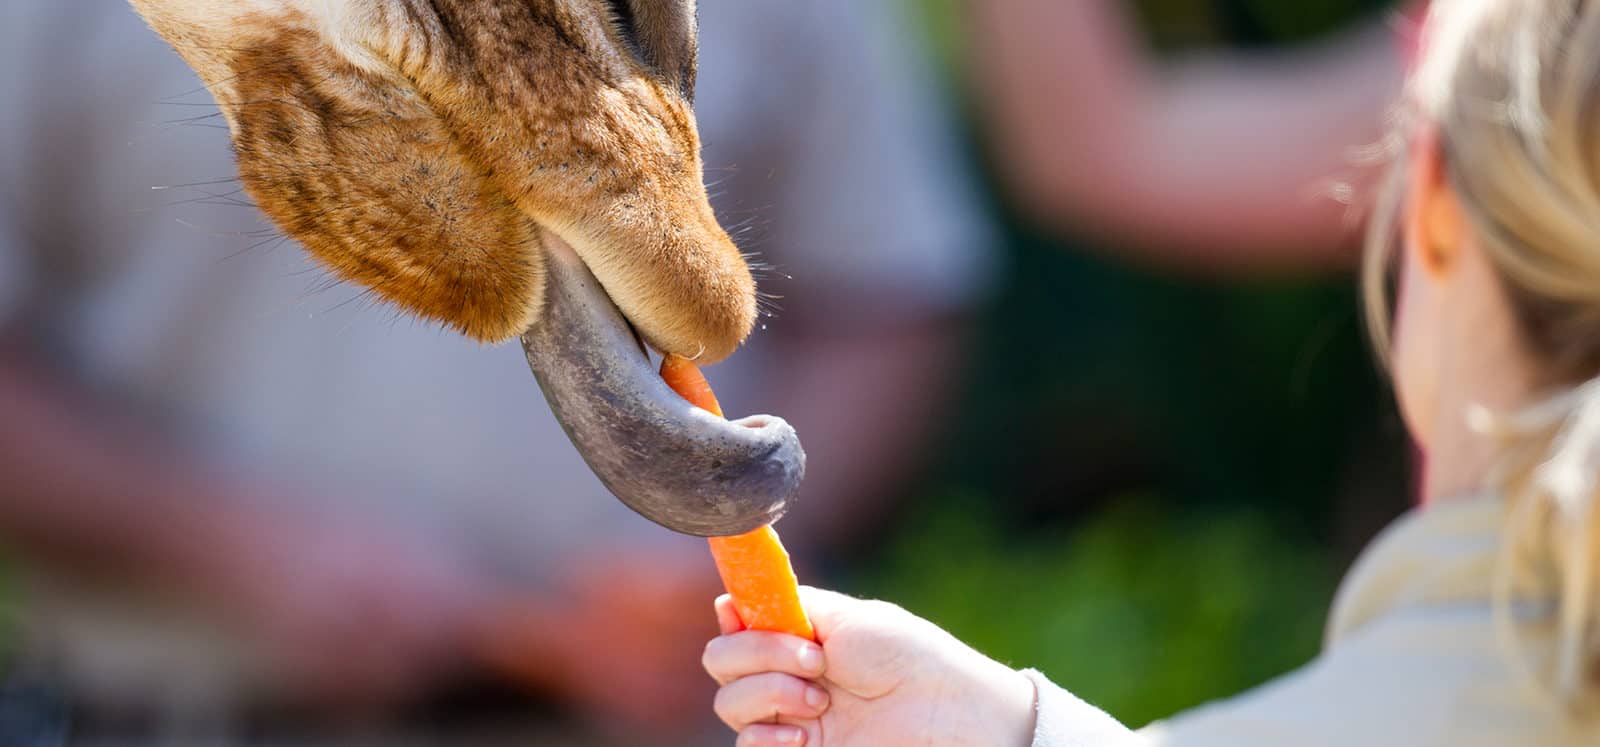 Woman feeding a Giraffe a carrot at Adelaide Zoo